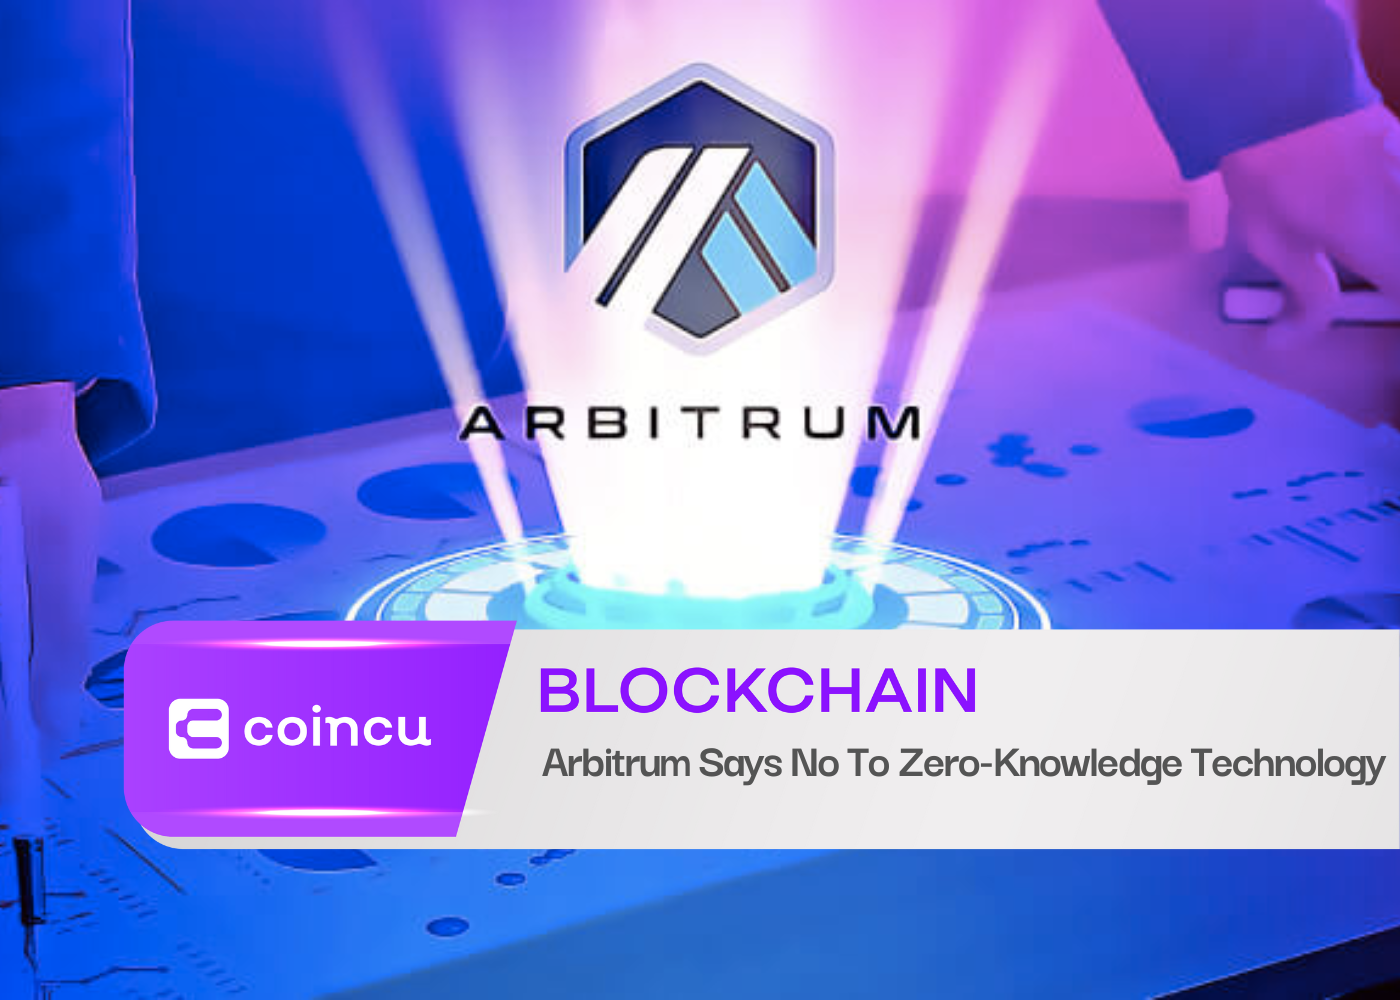 Arbitrum Says No To Zero-Knowledge Technology